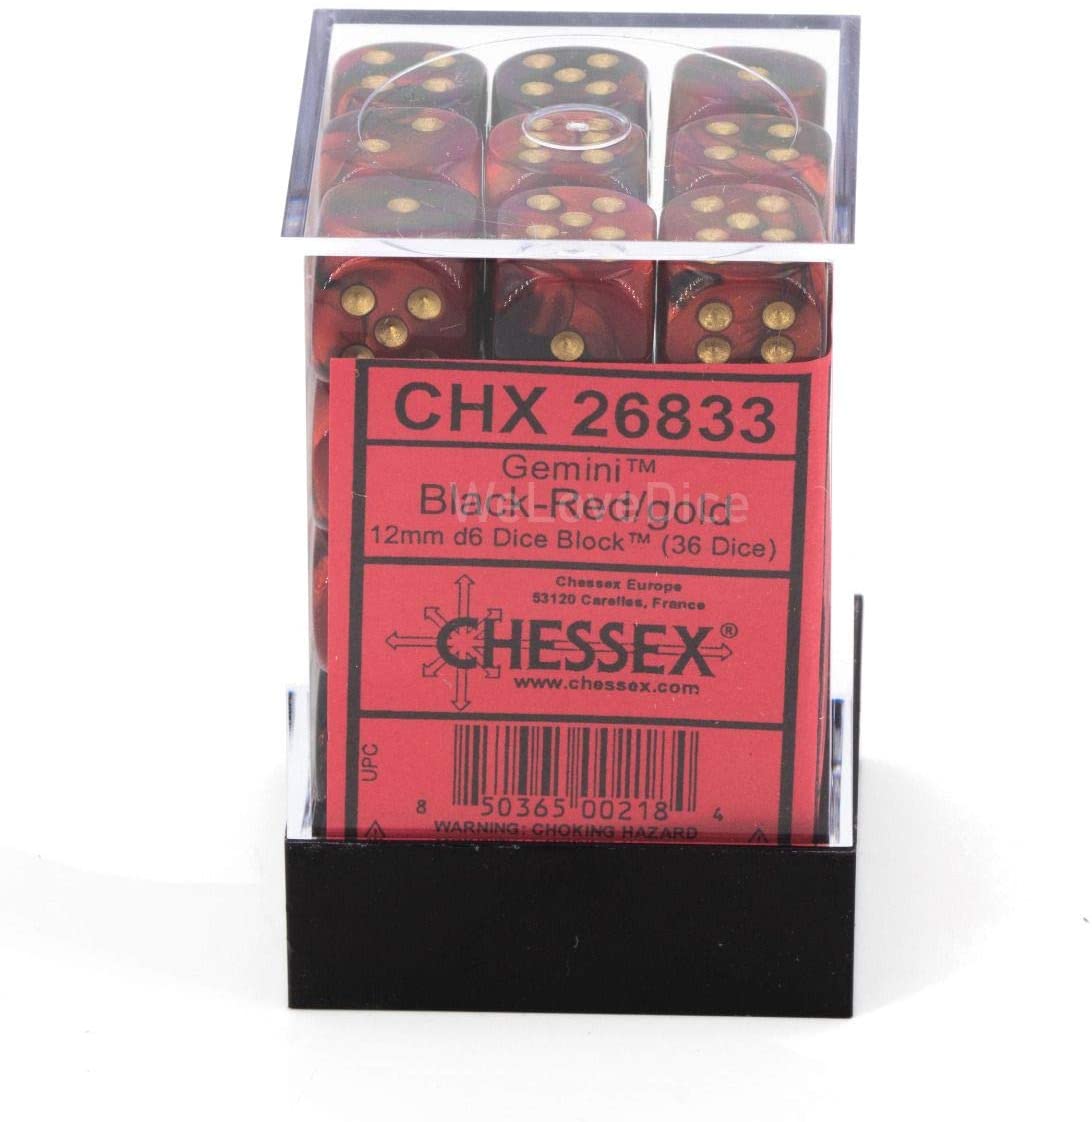 Chessex Dice: D6 Block 12mm - Gemini - Black-Red with Gold (CHX 26833) - Gamescape